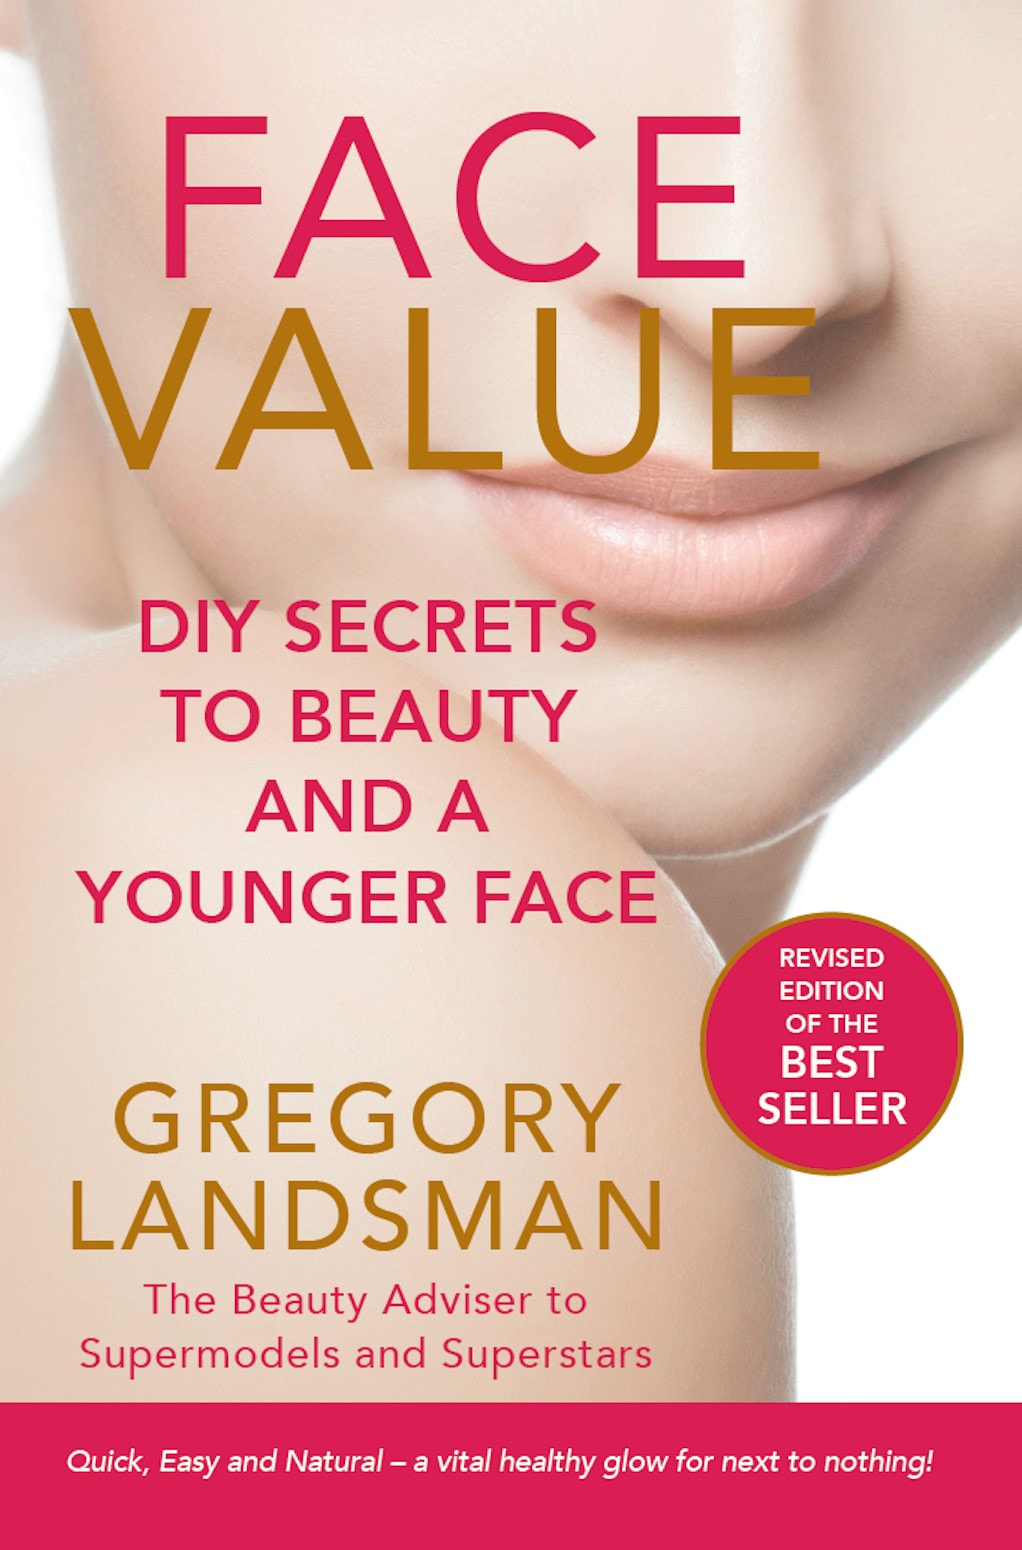 FACE VALUE by Gregory Landsman